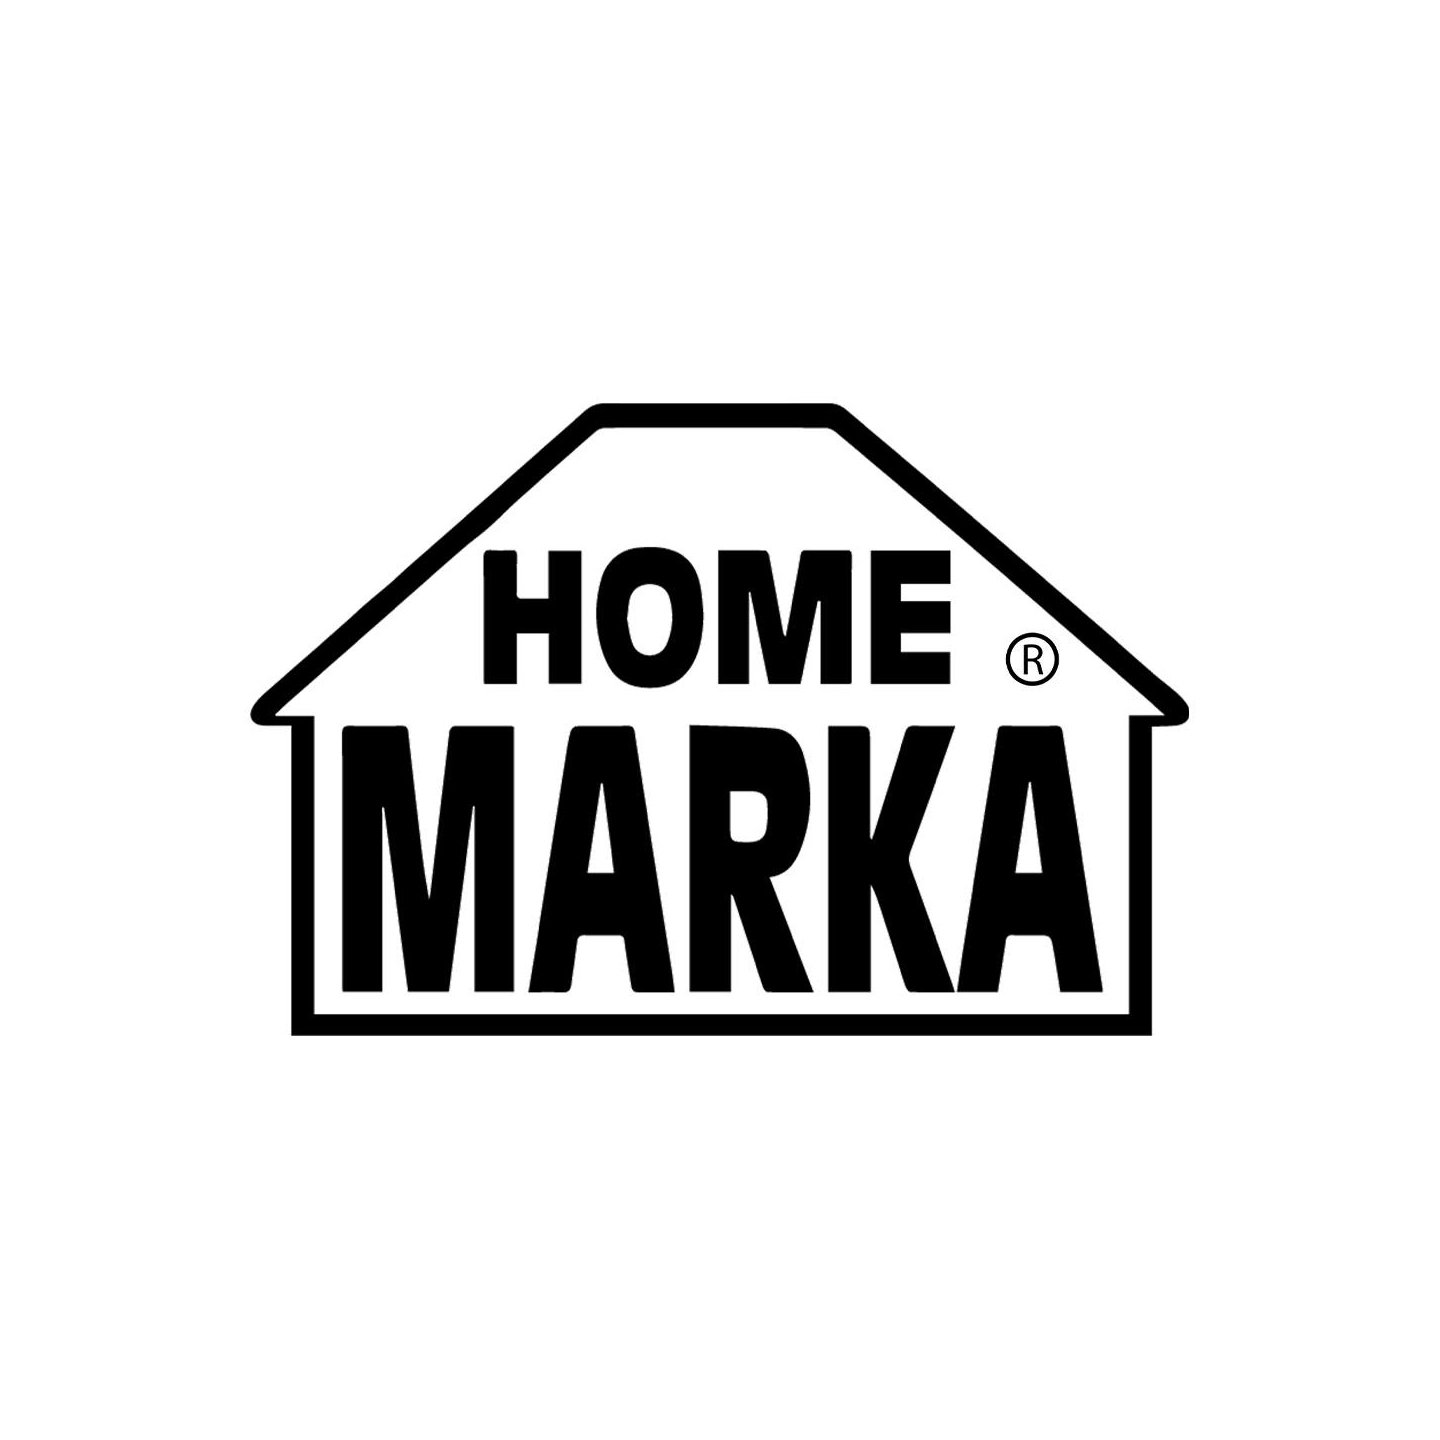 Home Marka